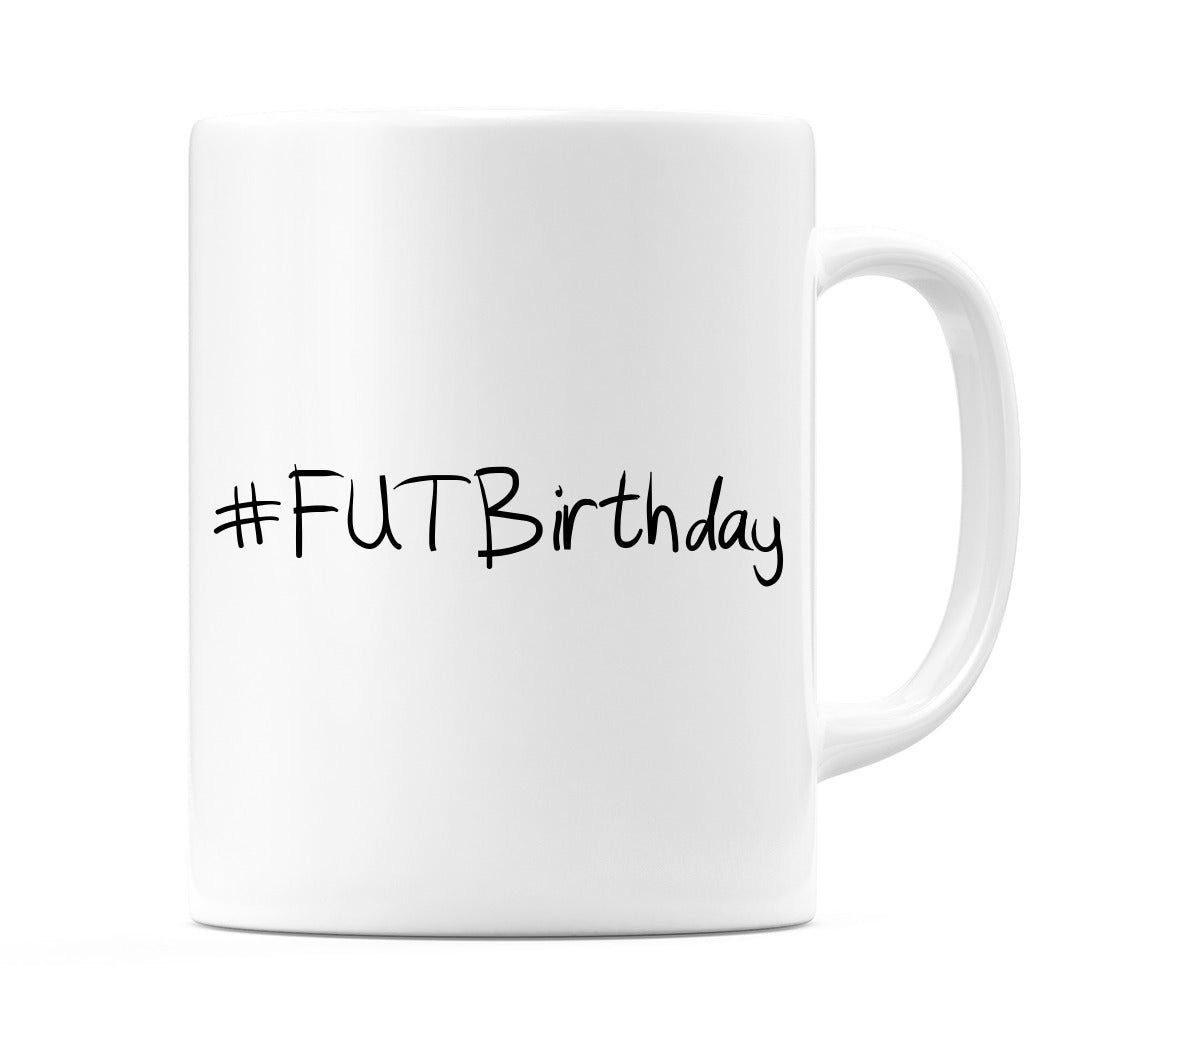 #FUTBirthday Mug